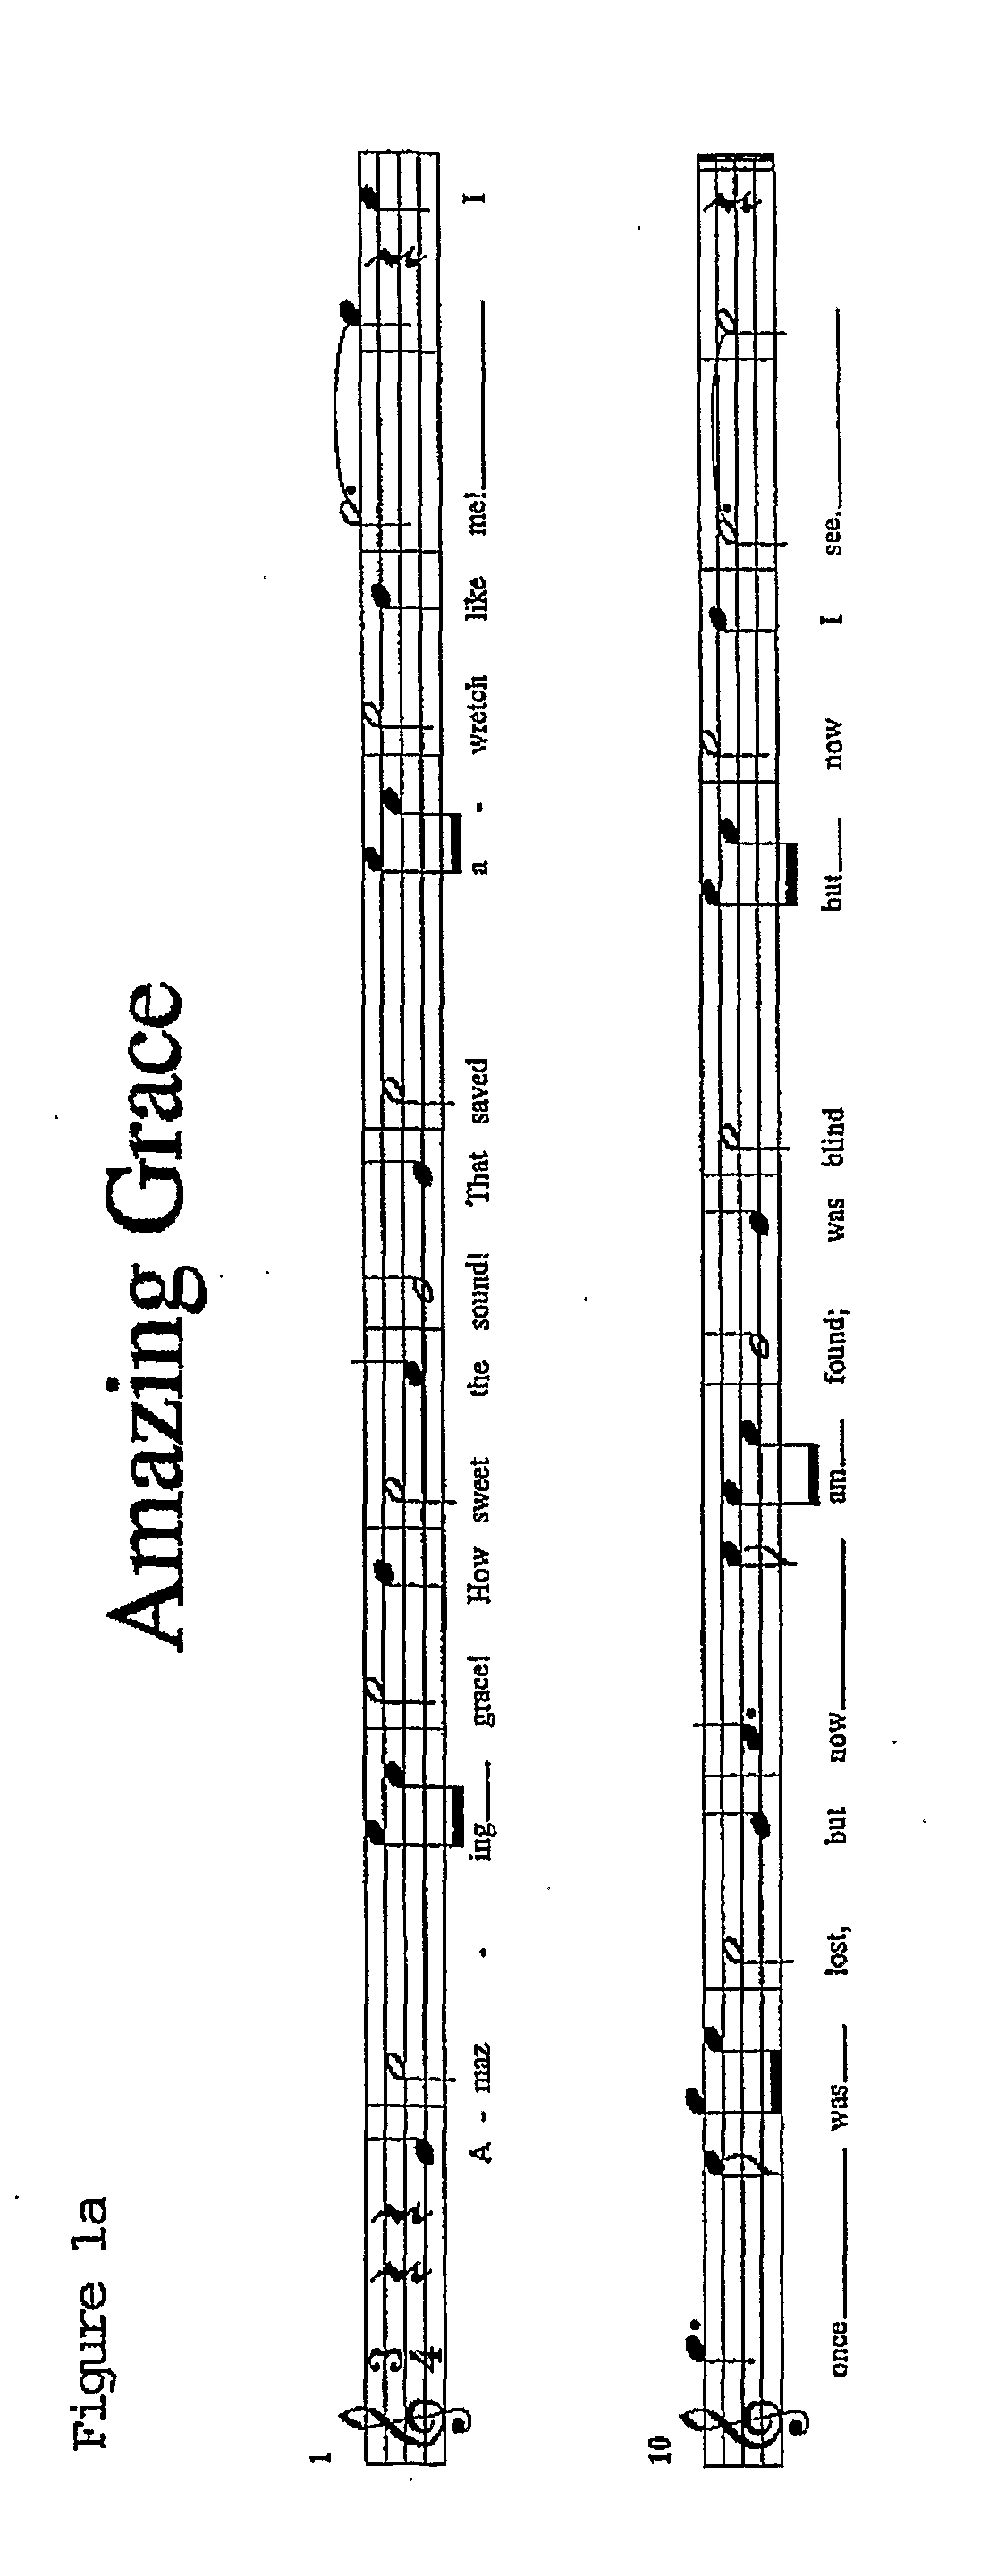 Isomorphic Solfa Music Notation and Keyboard